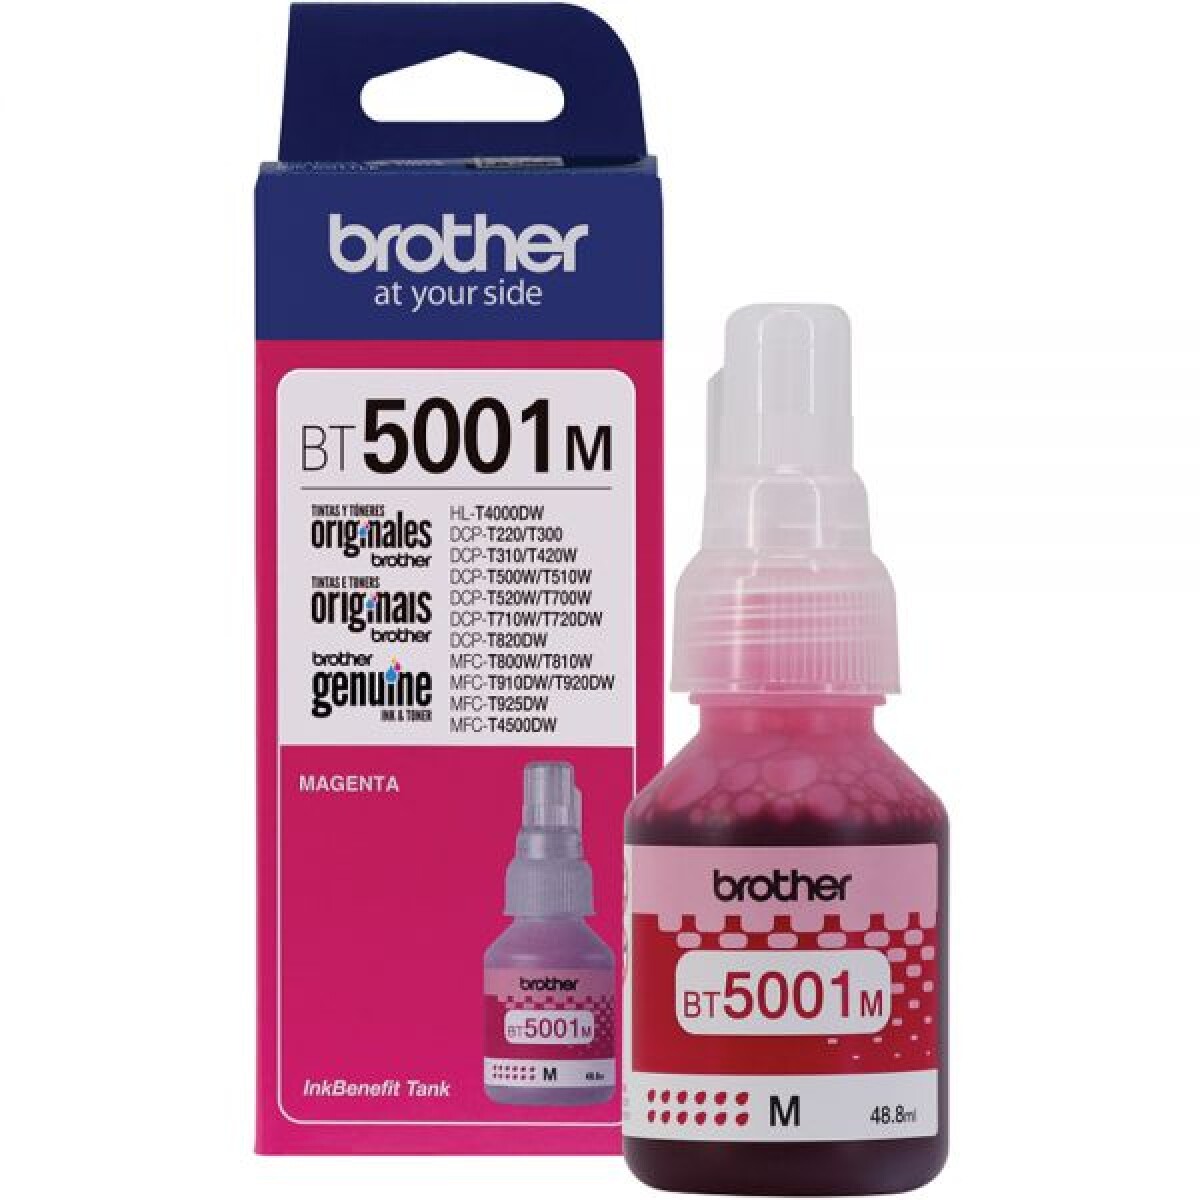 Botella de tinta brother bt5001 48.8ml - Magenta 